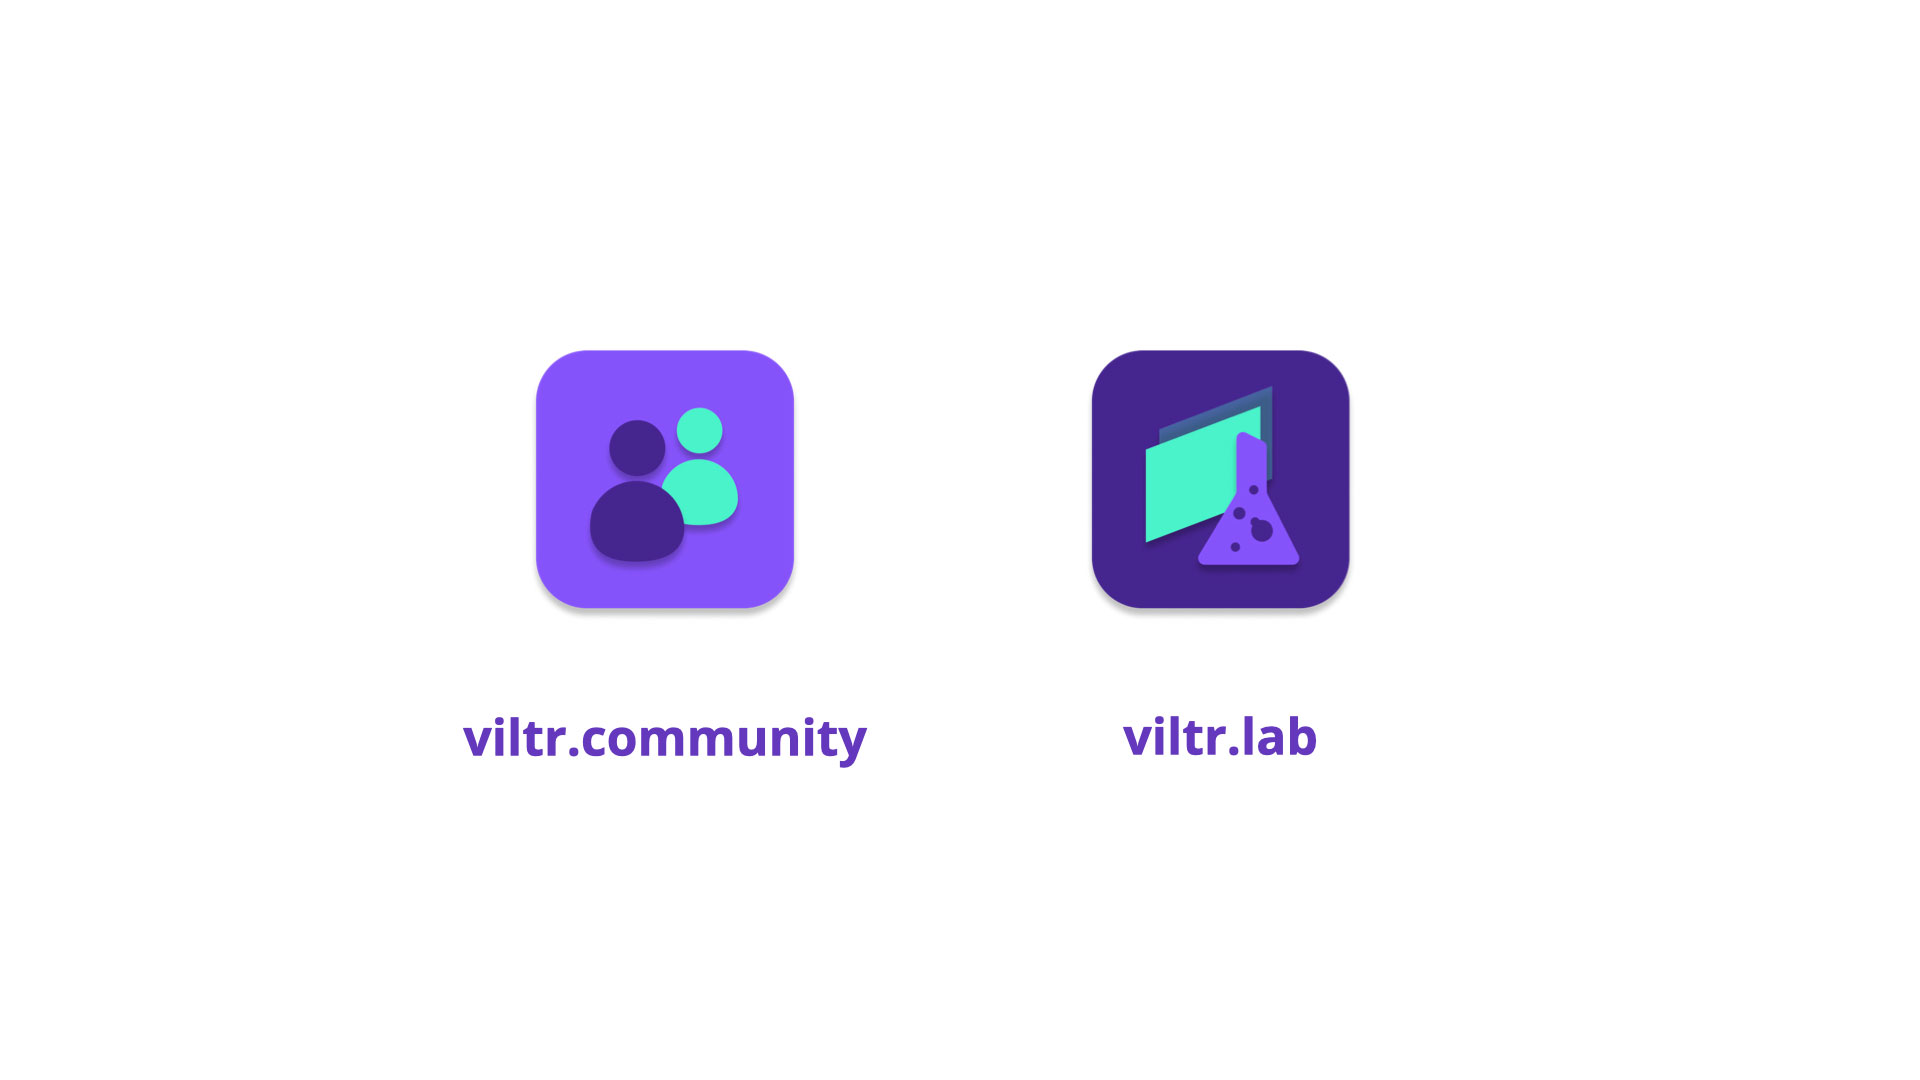 viltr.community and viltr.lab app icons